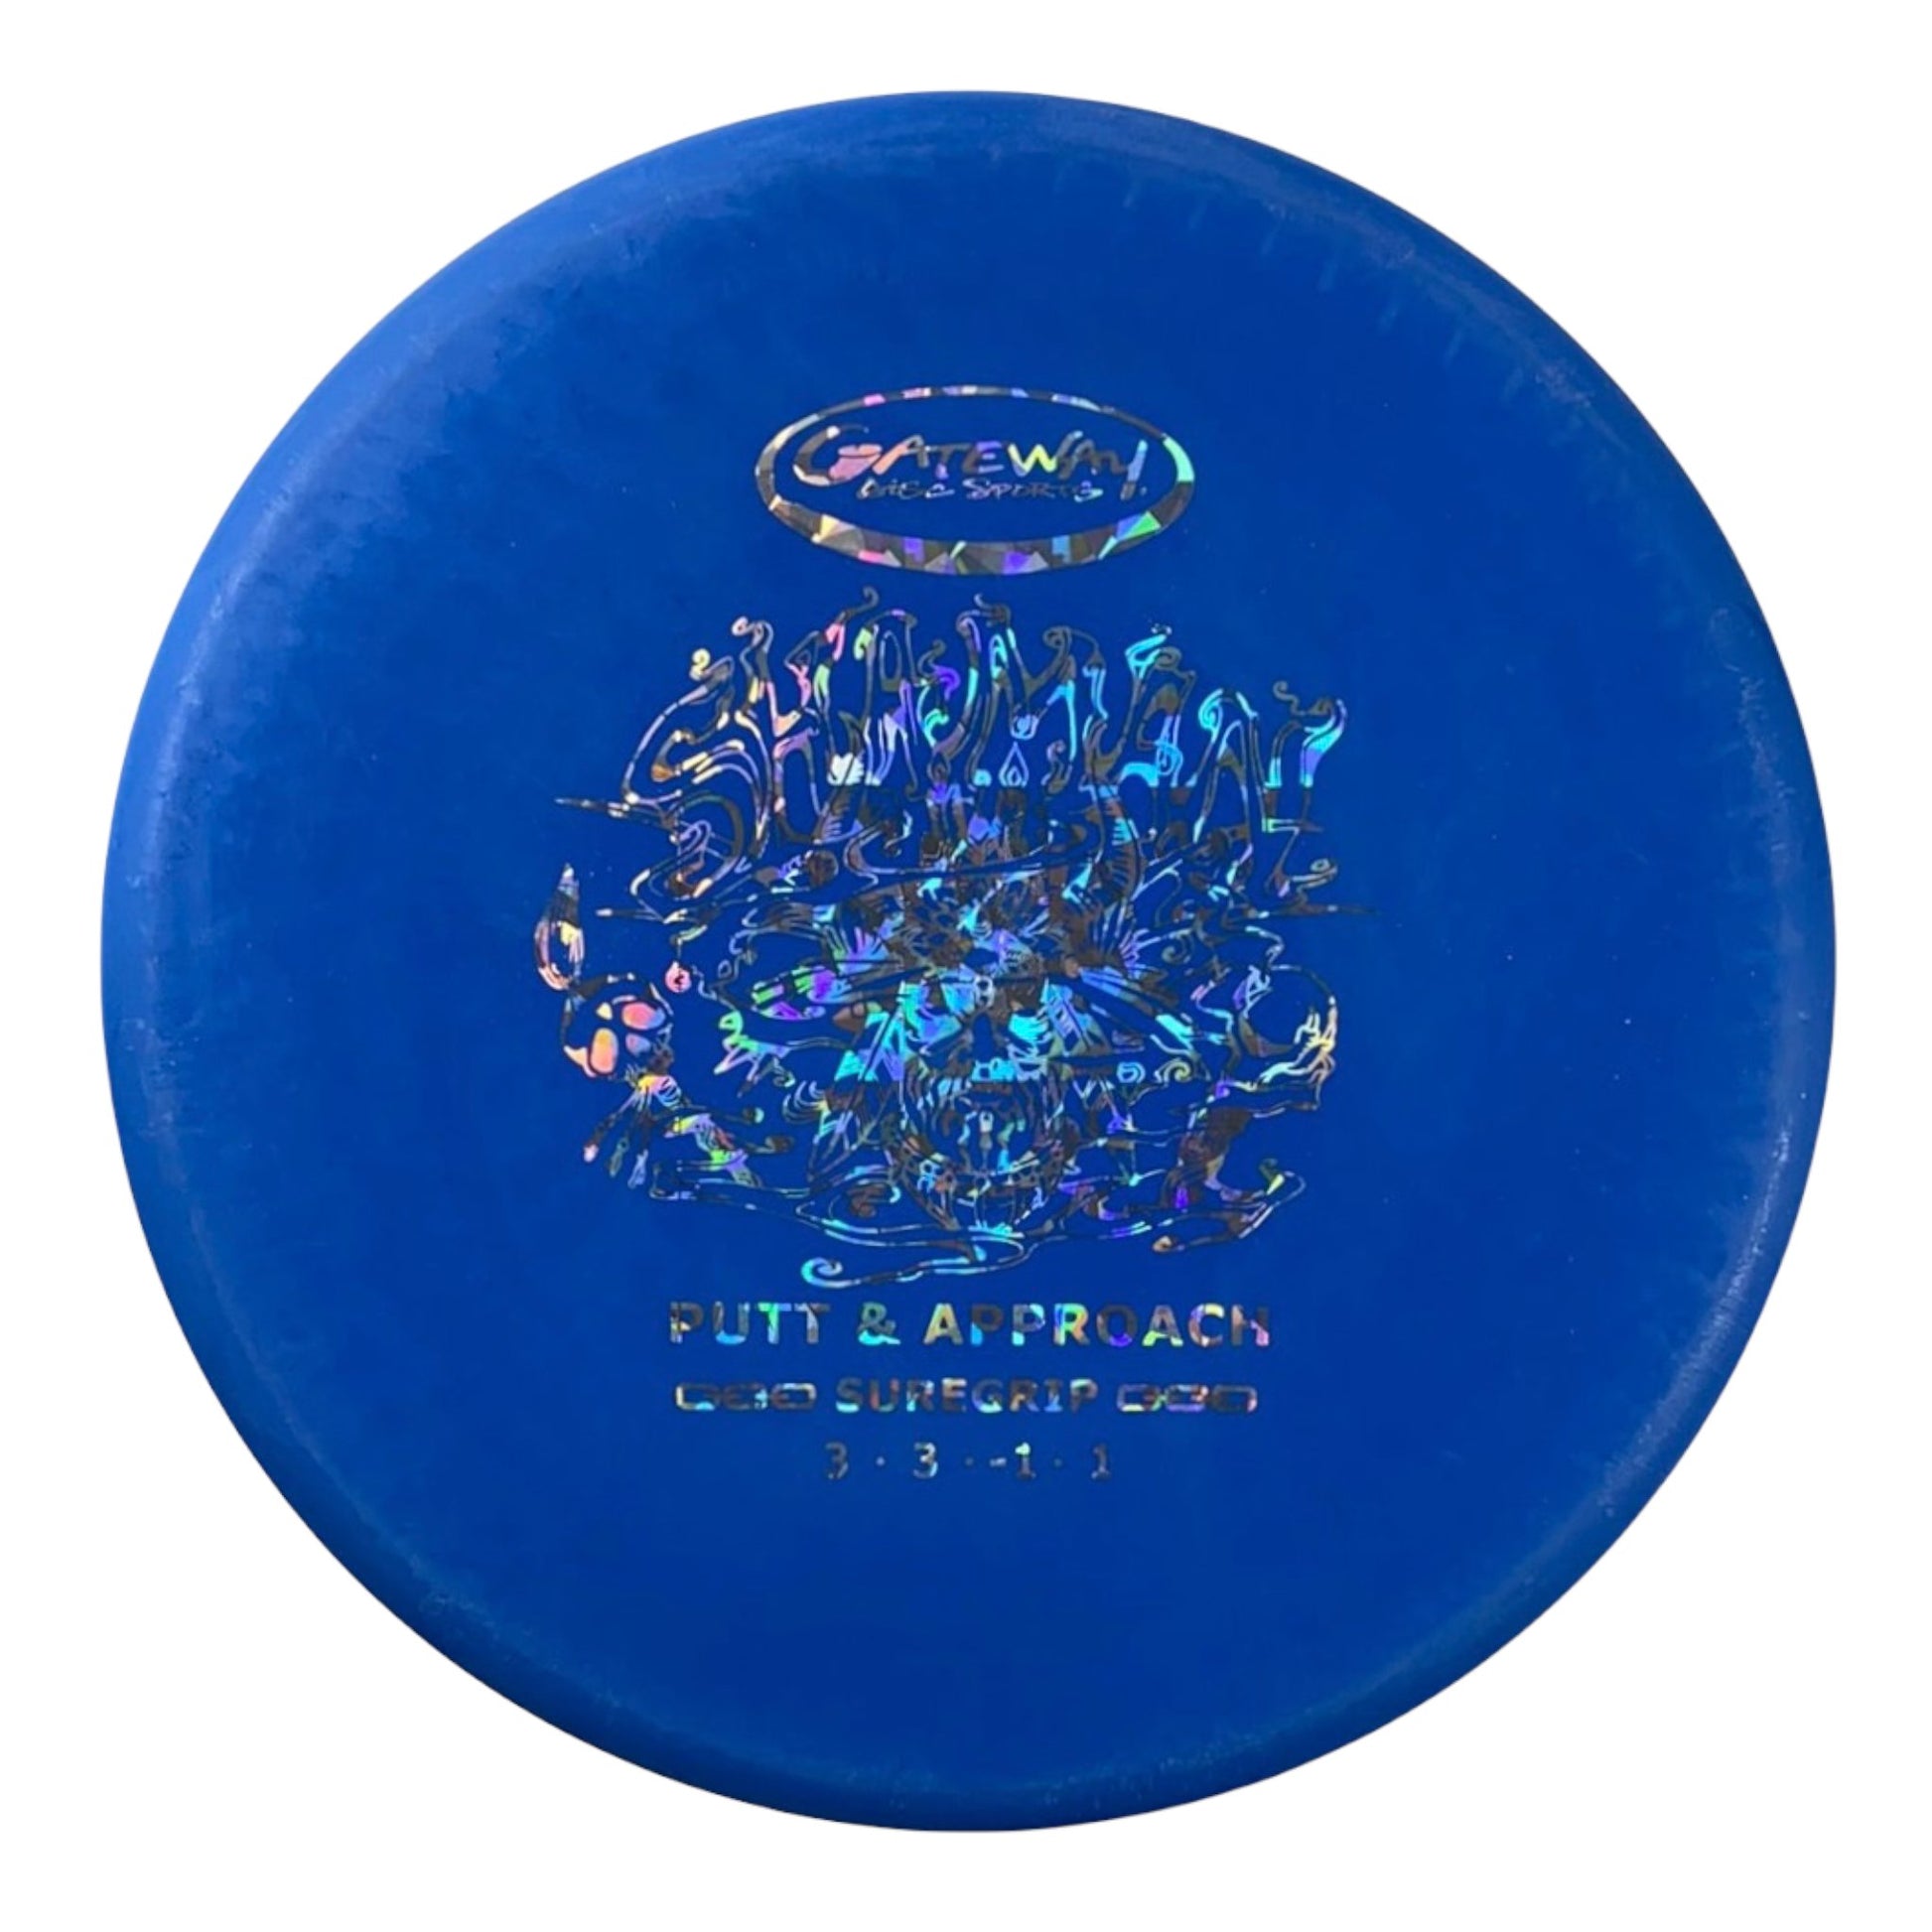 Gateway Disc Sports Shaman | Suregrip Super Soft | Blue/Holo 171-172g Disc Golf